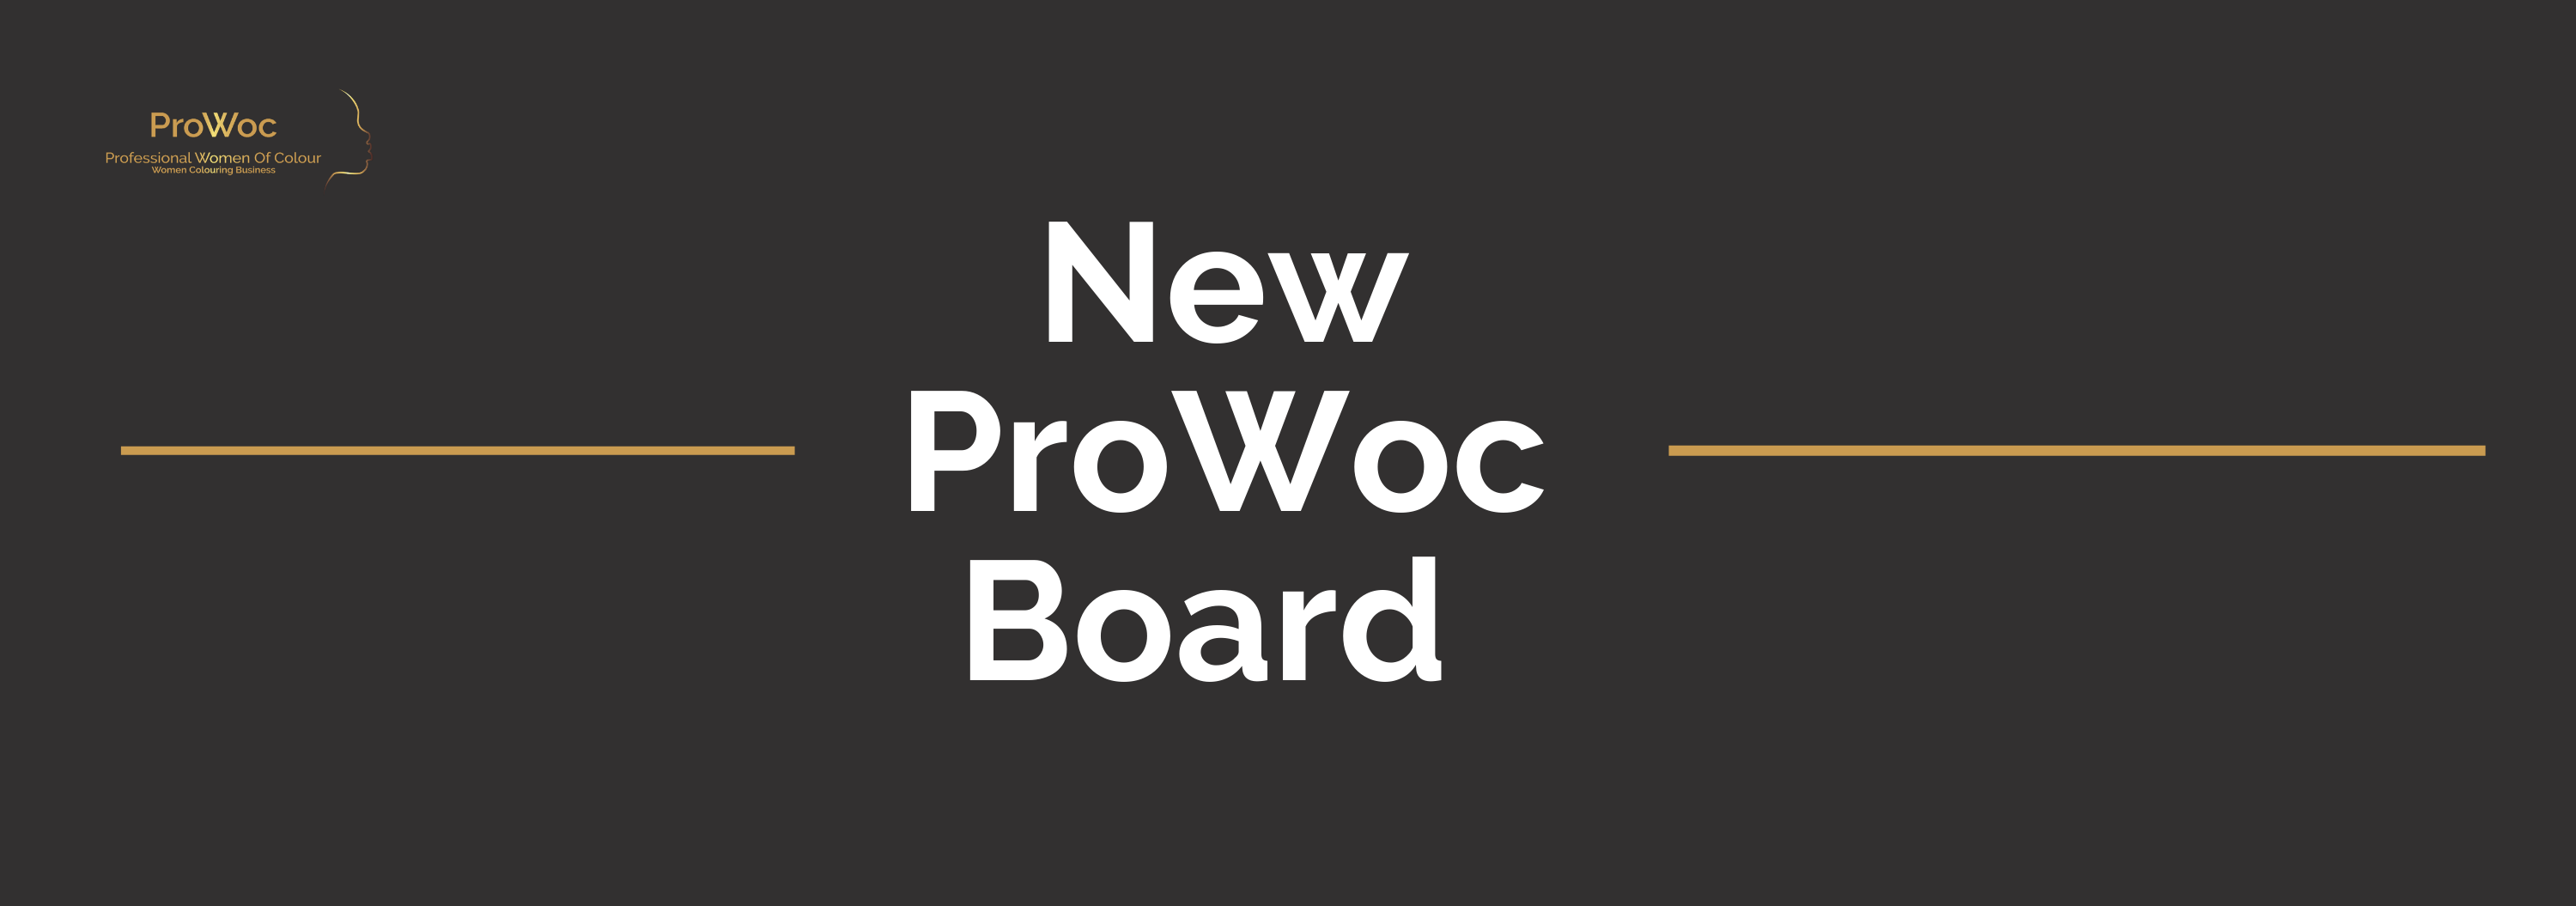 New ProWoc Board banner